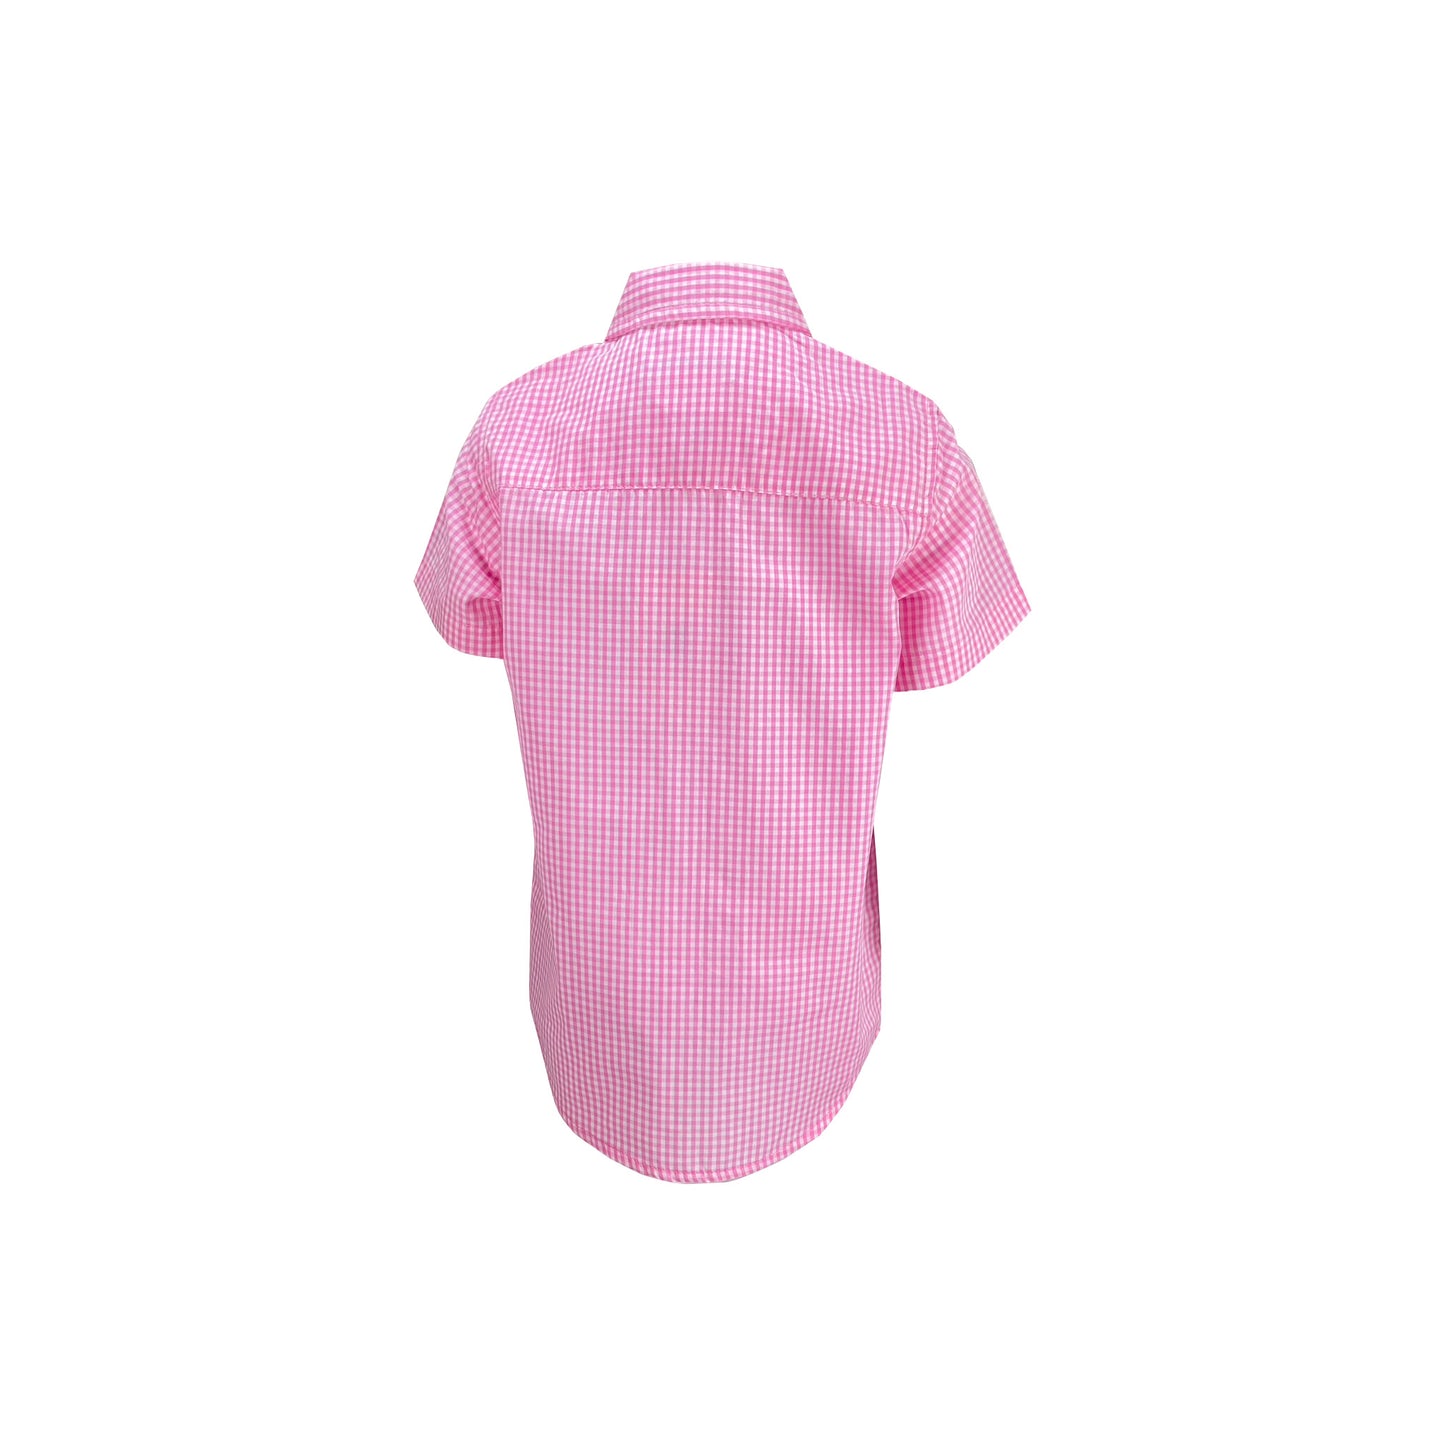 Ishtex ® Pink Short Sleeve Button Down Shirt